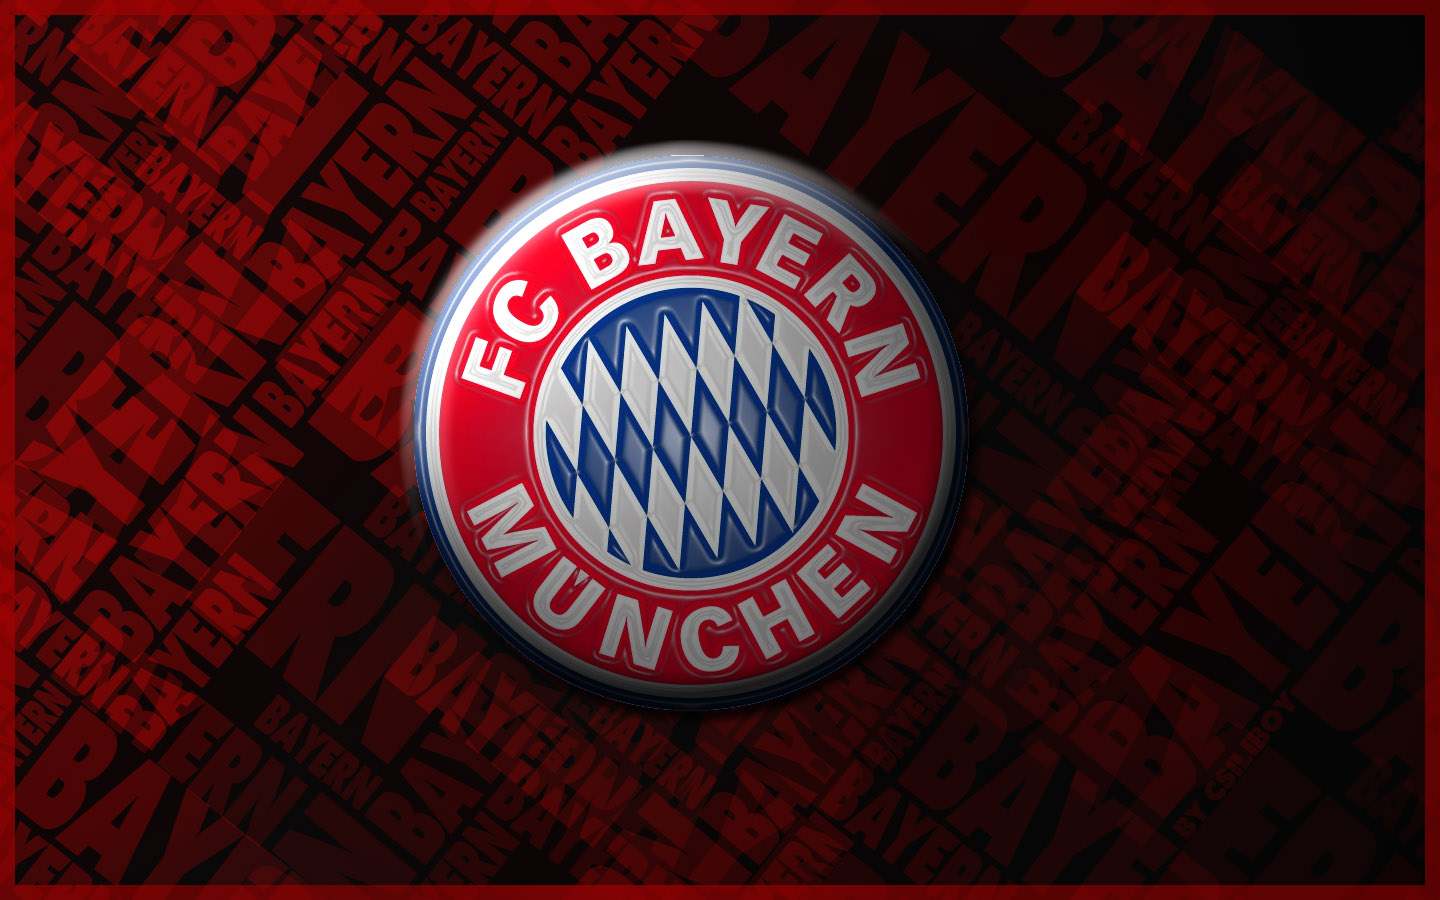 Free download Bayern Munchen logo [1440x900] for your Desktop, Mobile & Tablet. Explore FC Bayern Munich Wallpaper. Bayern Munich Logo Wallpaper, Bayern Munich iPhone Wallpaper, Bayern Munchen Wallpaper for Android